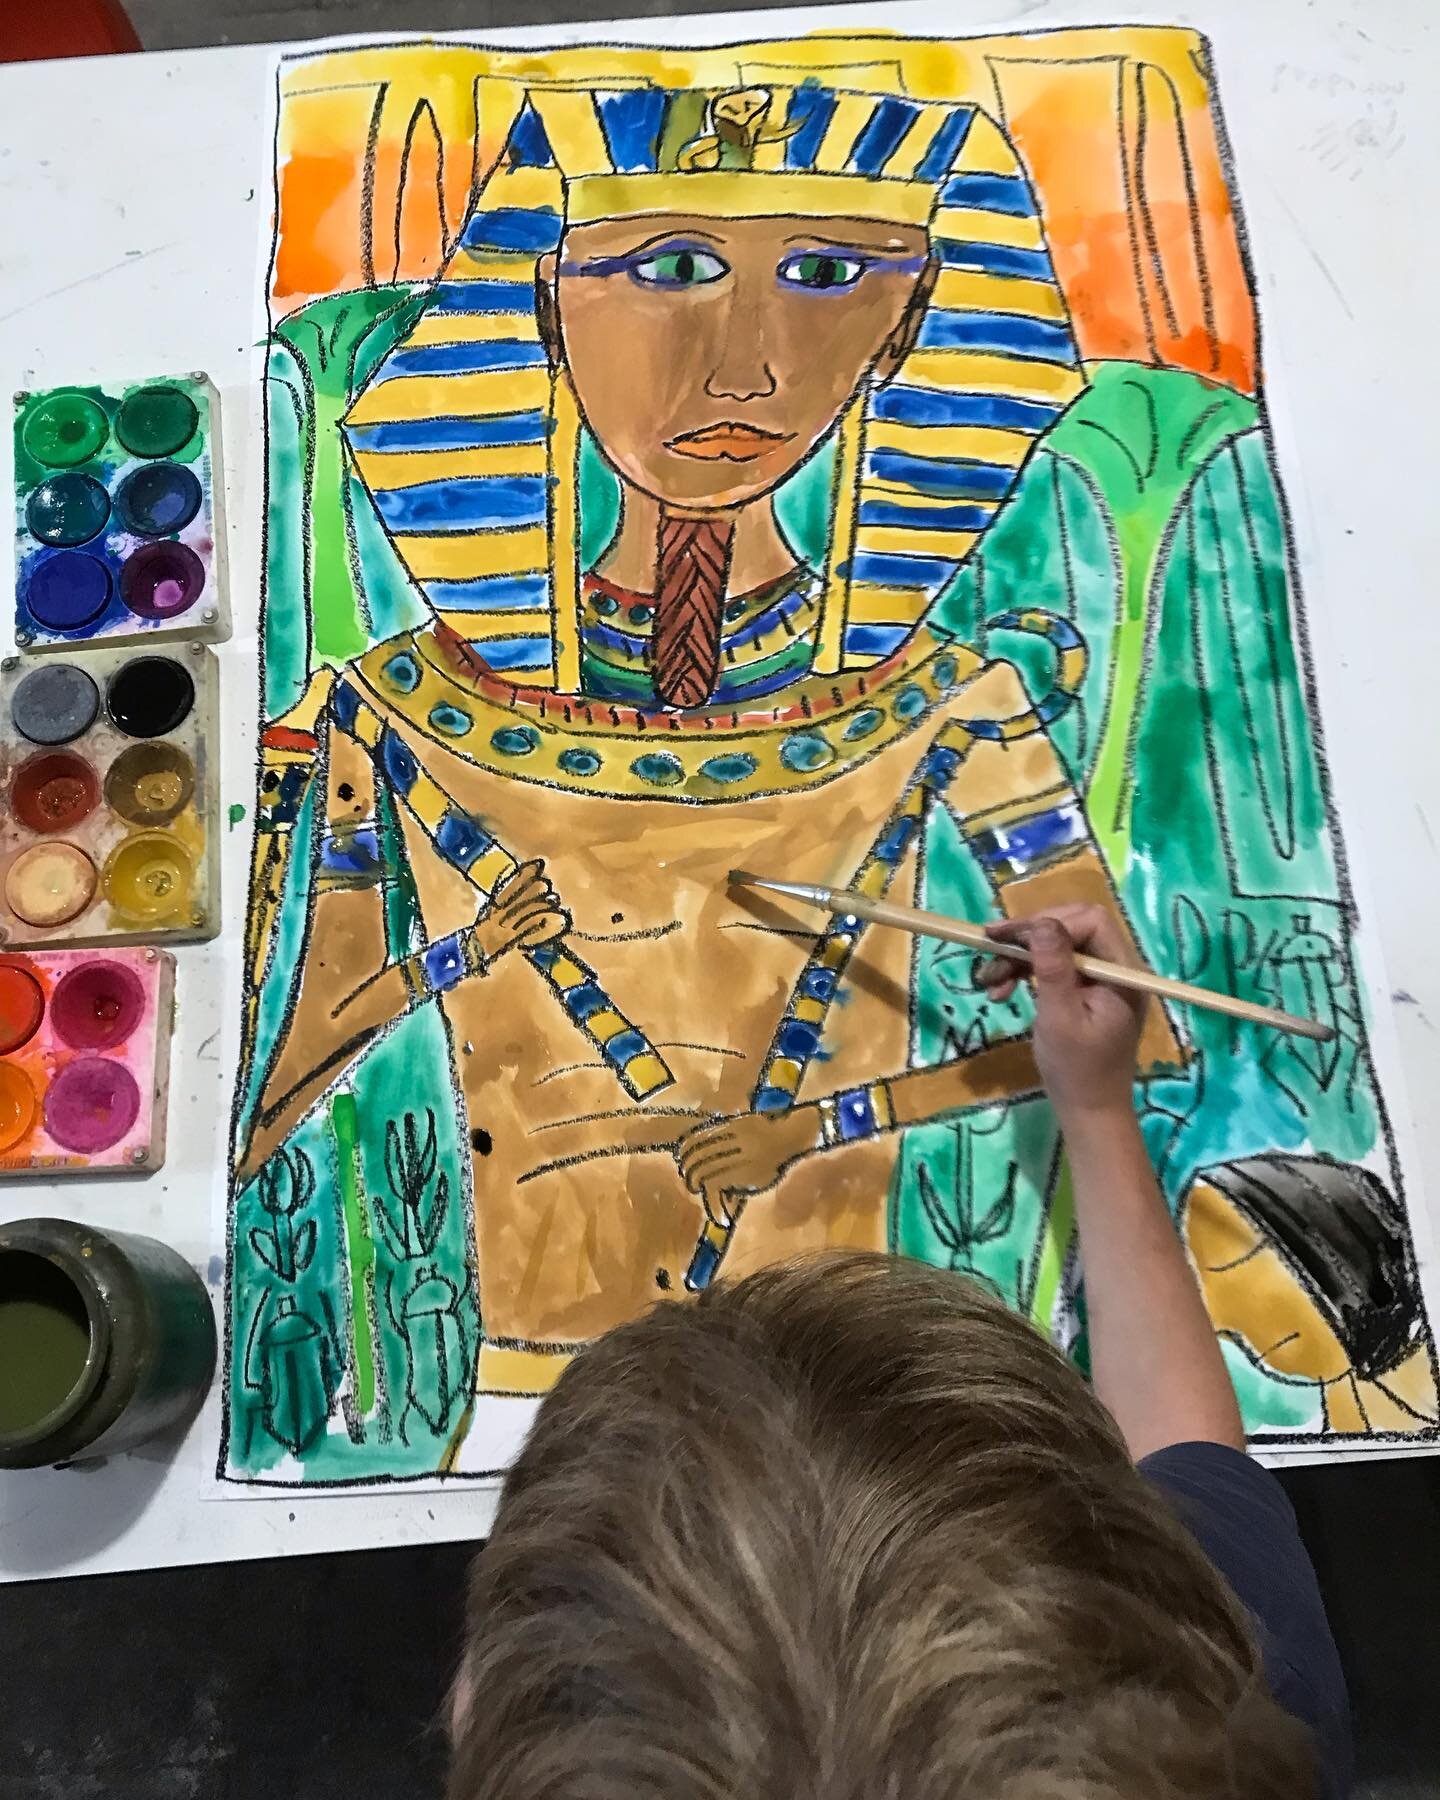 Egyptian Pharaoh, Intermediate Class.
#ruthtuckartschool #egypt #pharaoh #watercolour #watercolor #holidayclass